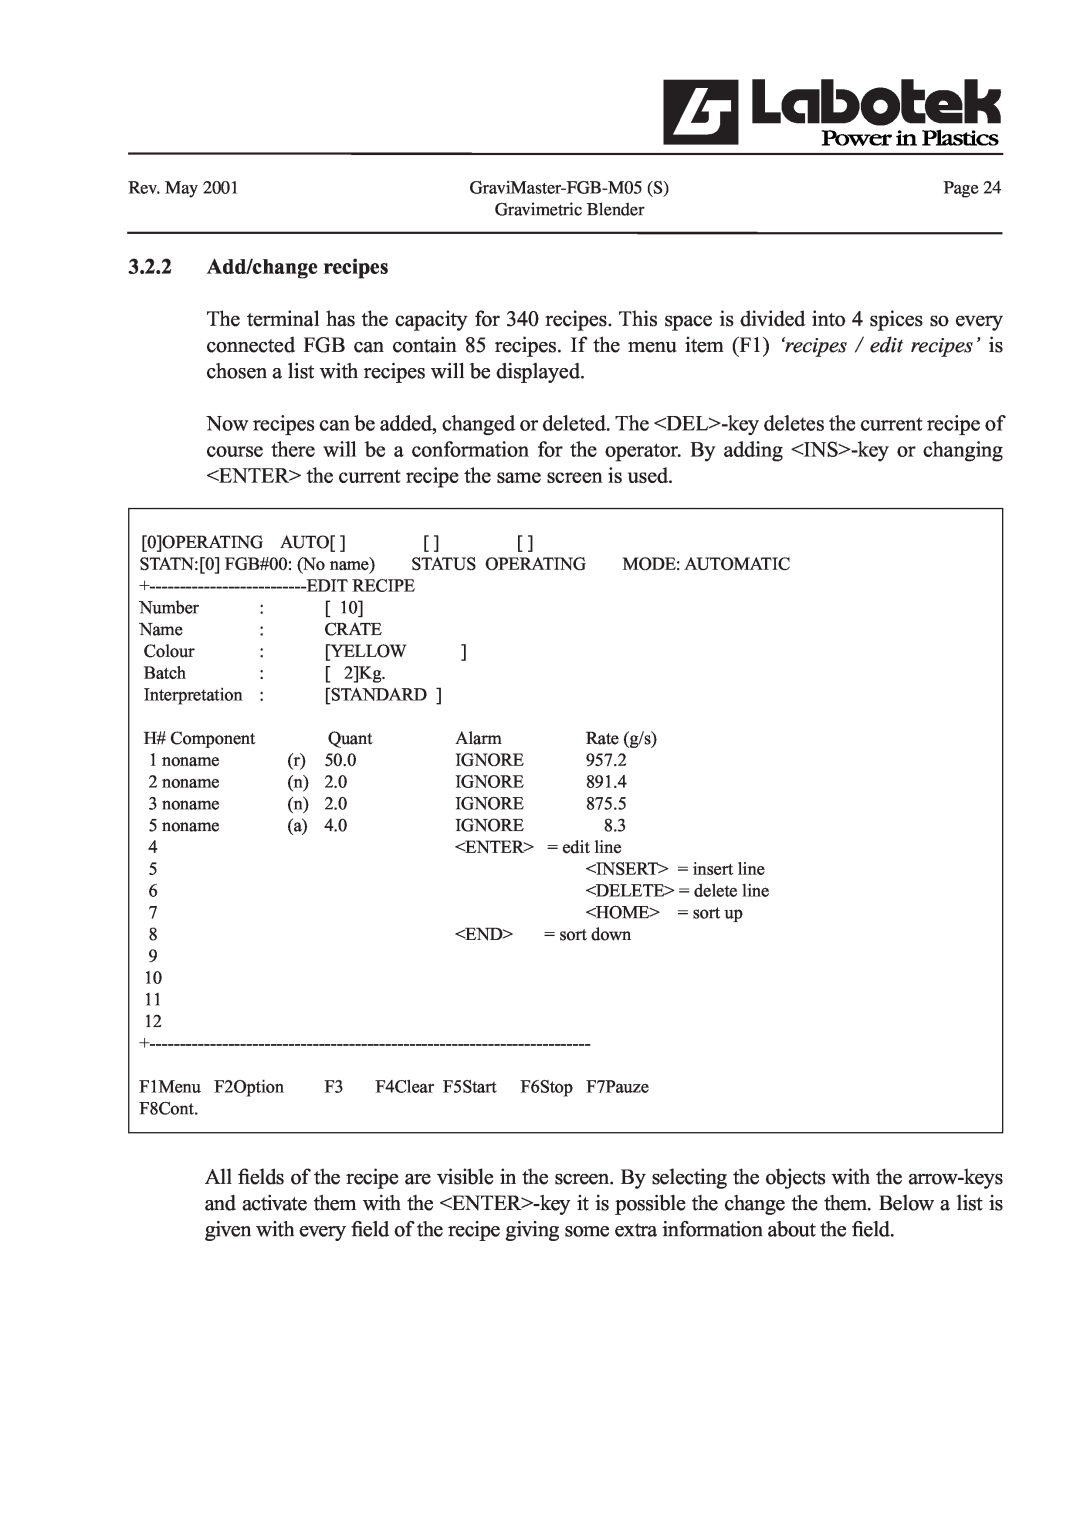 GE FGB-M05 manual 3.2.2Add/change recipes 